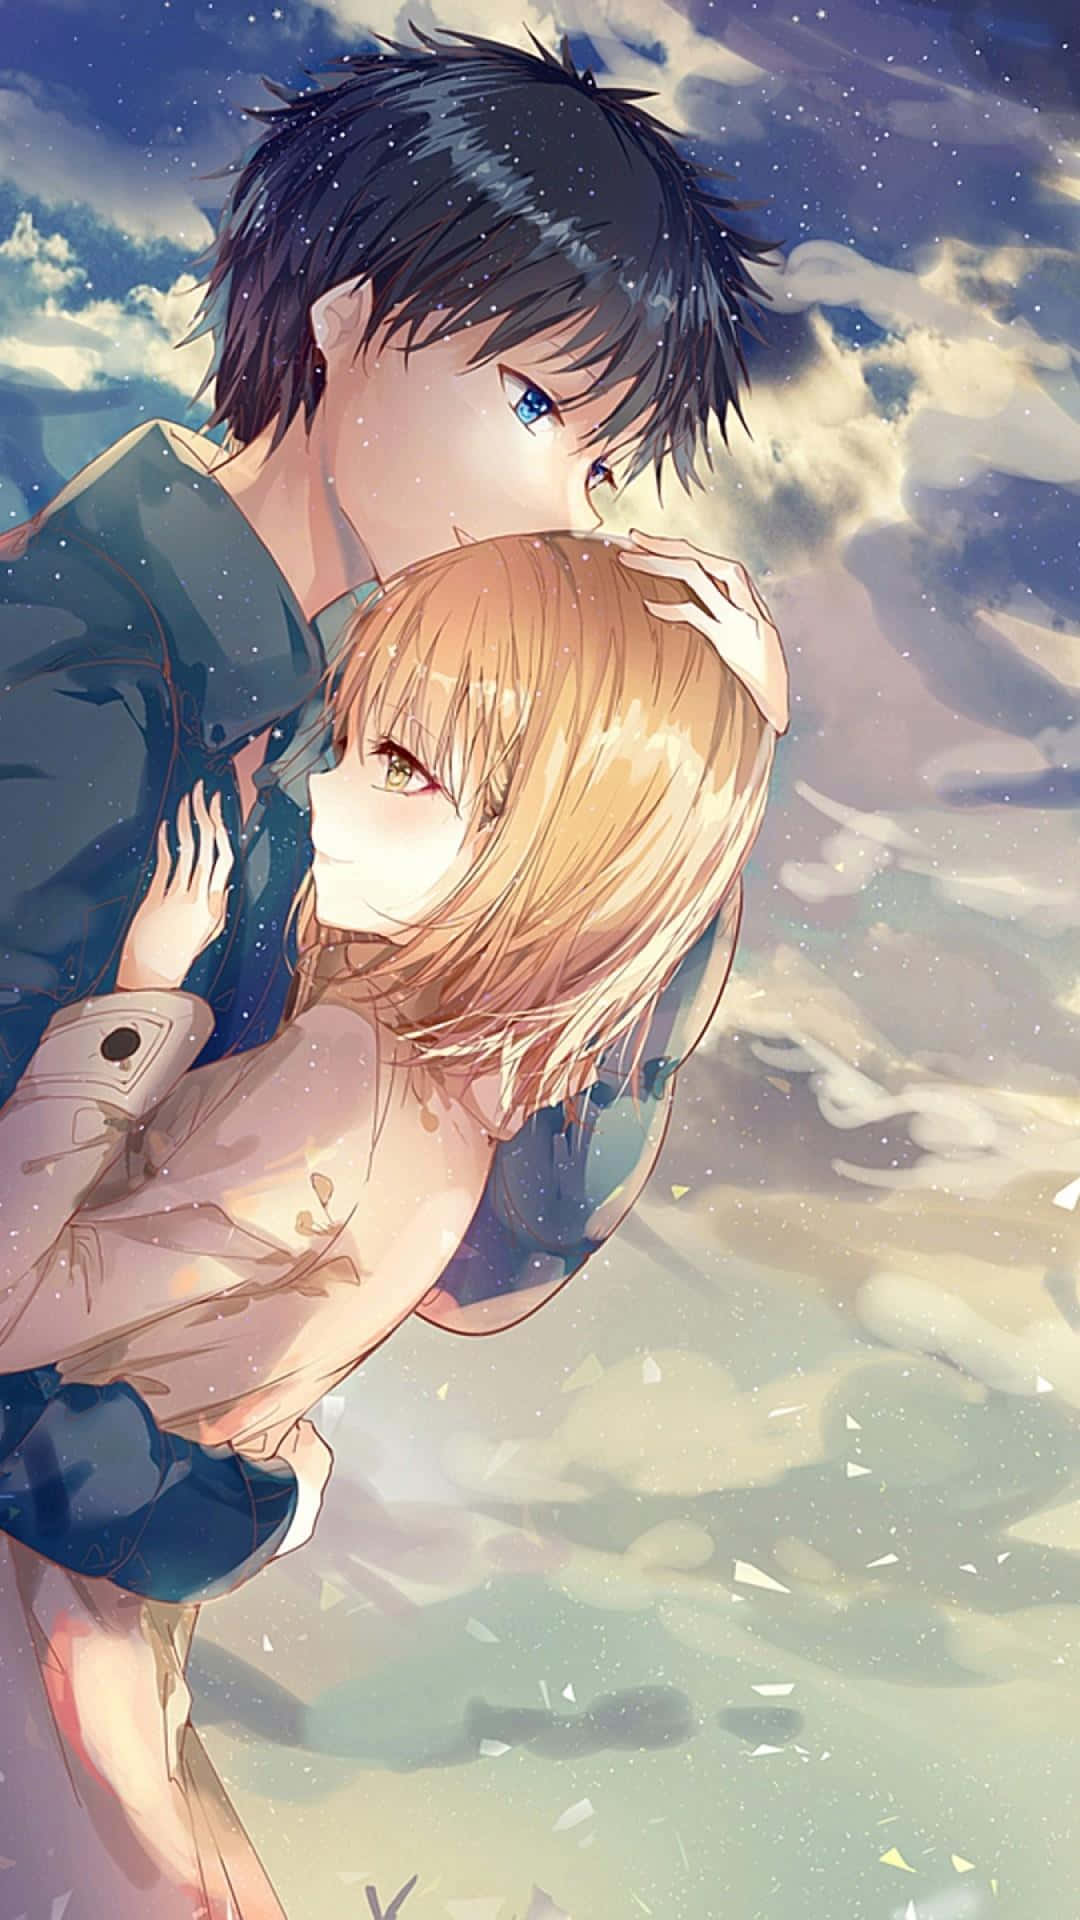 Adorable Anime Couple Embracing their Love